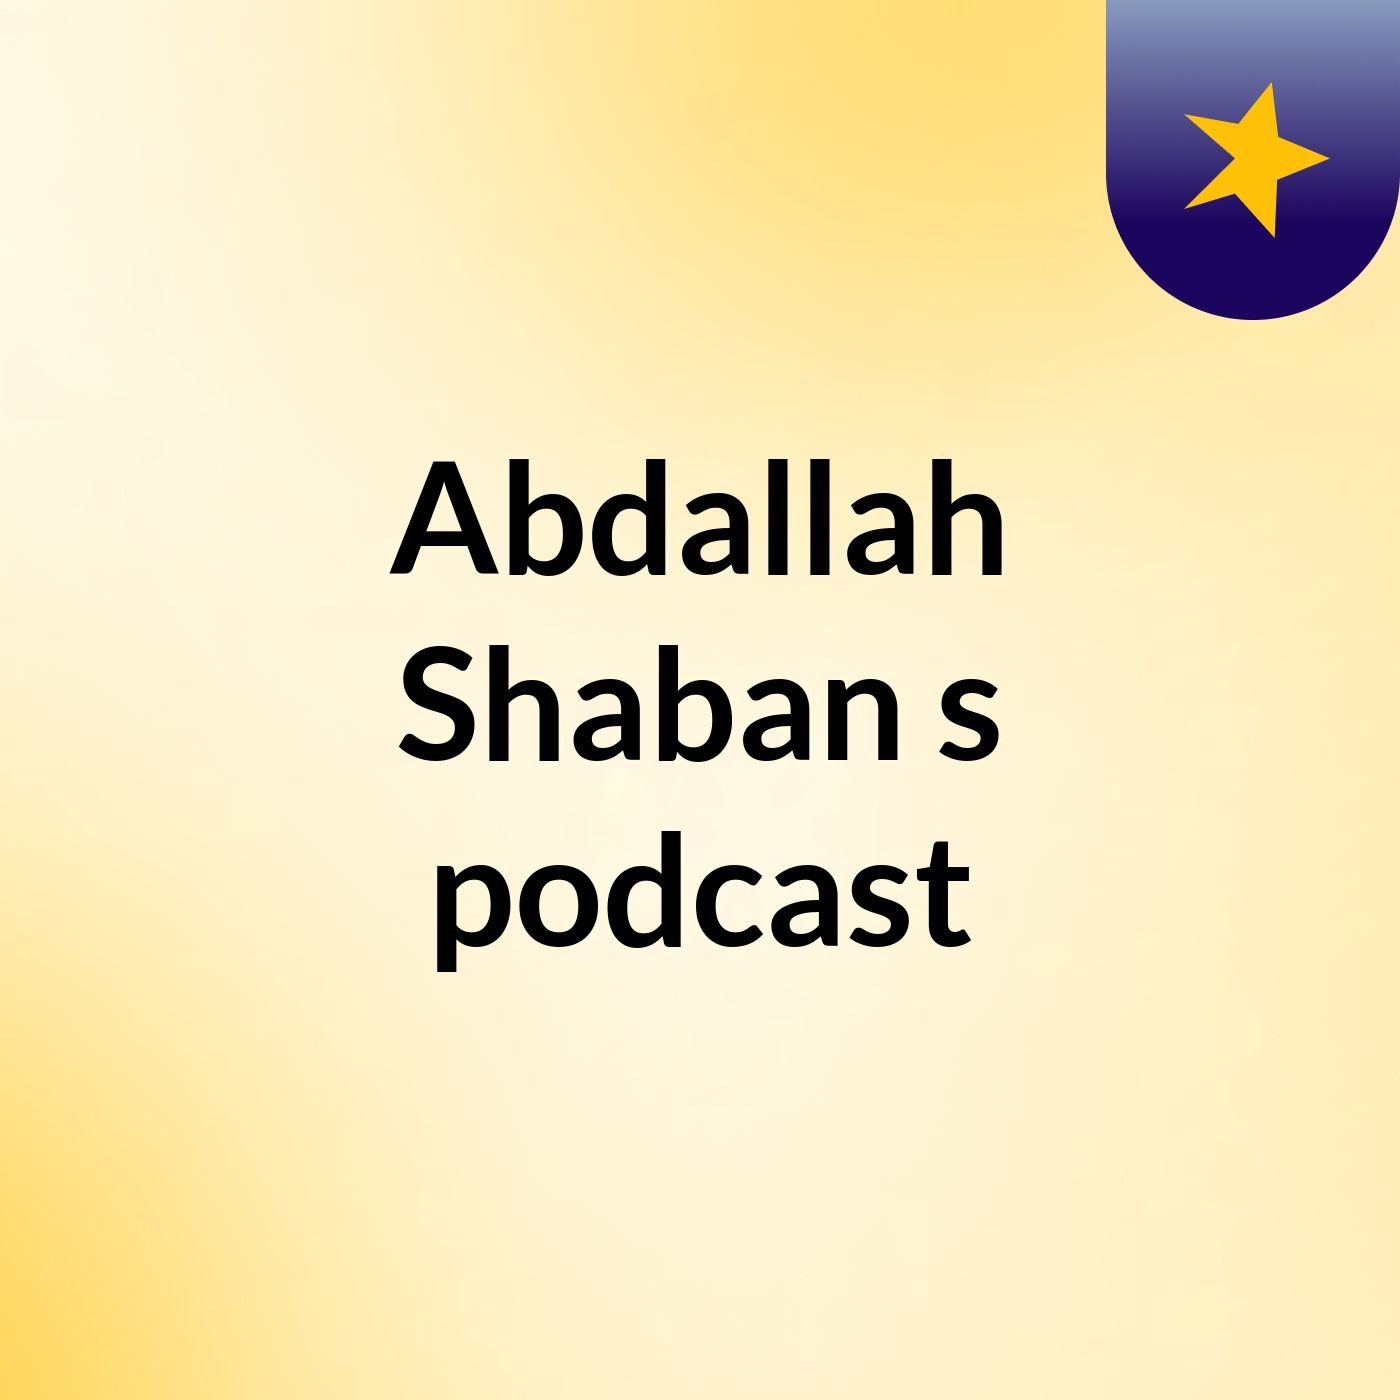 Abdallah Shaban's podcast